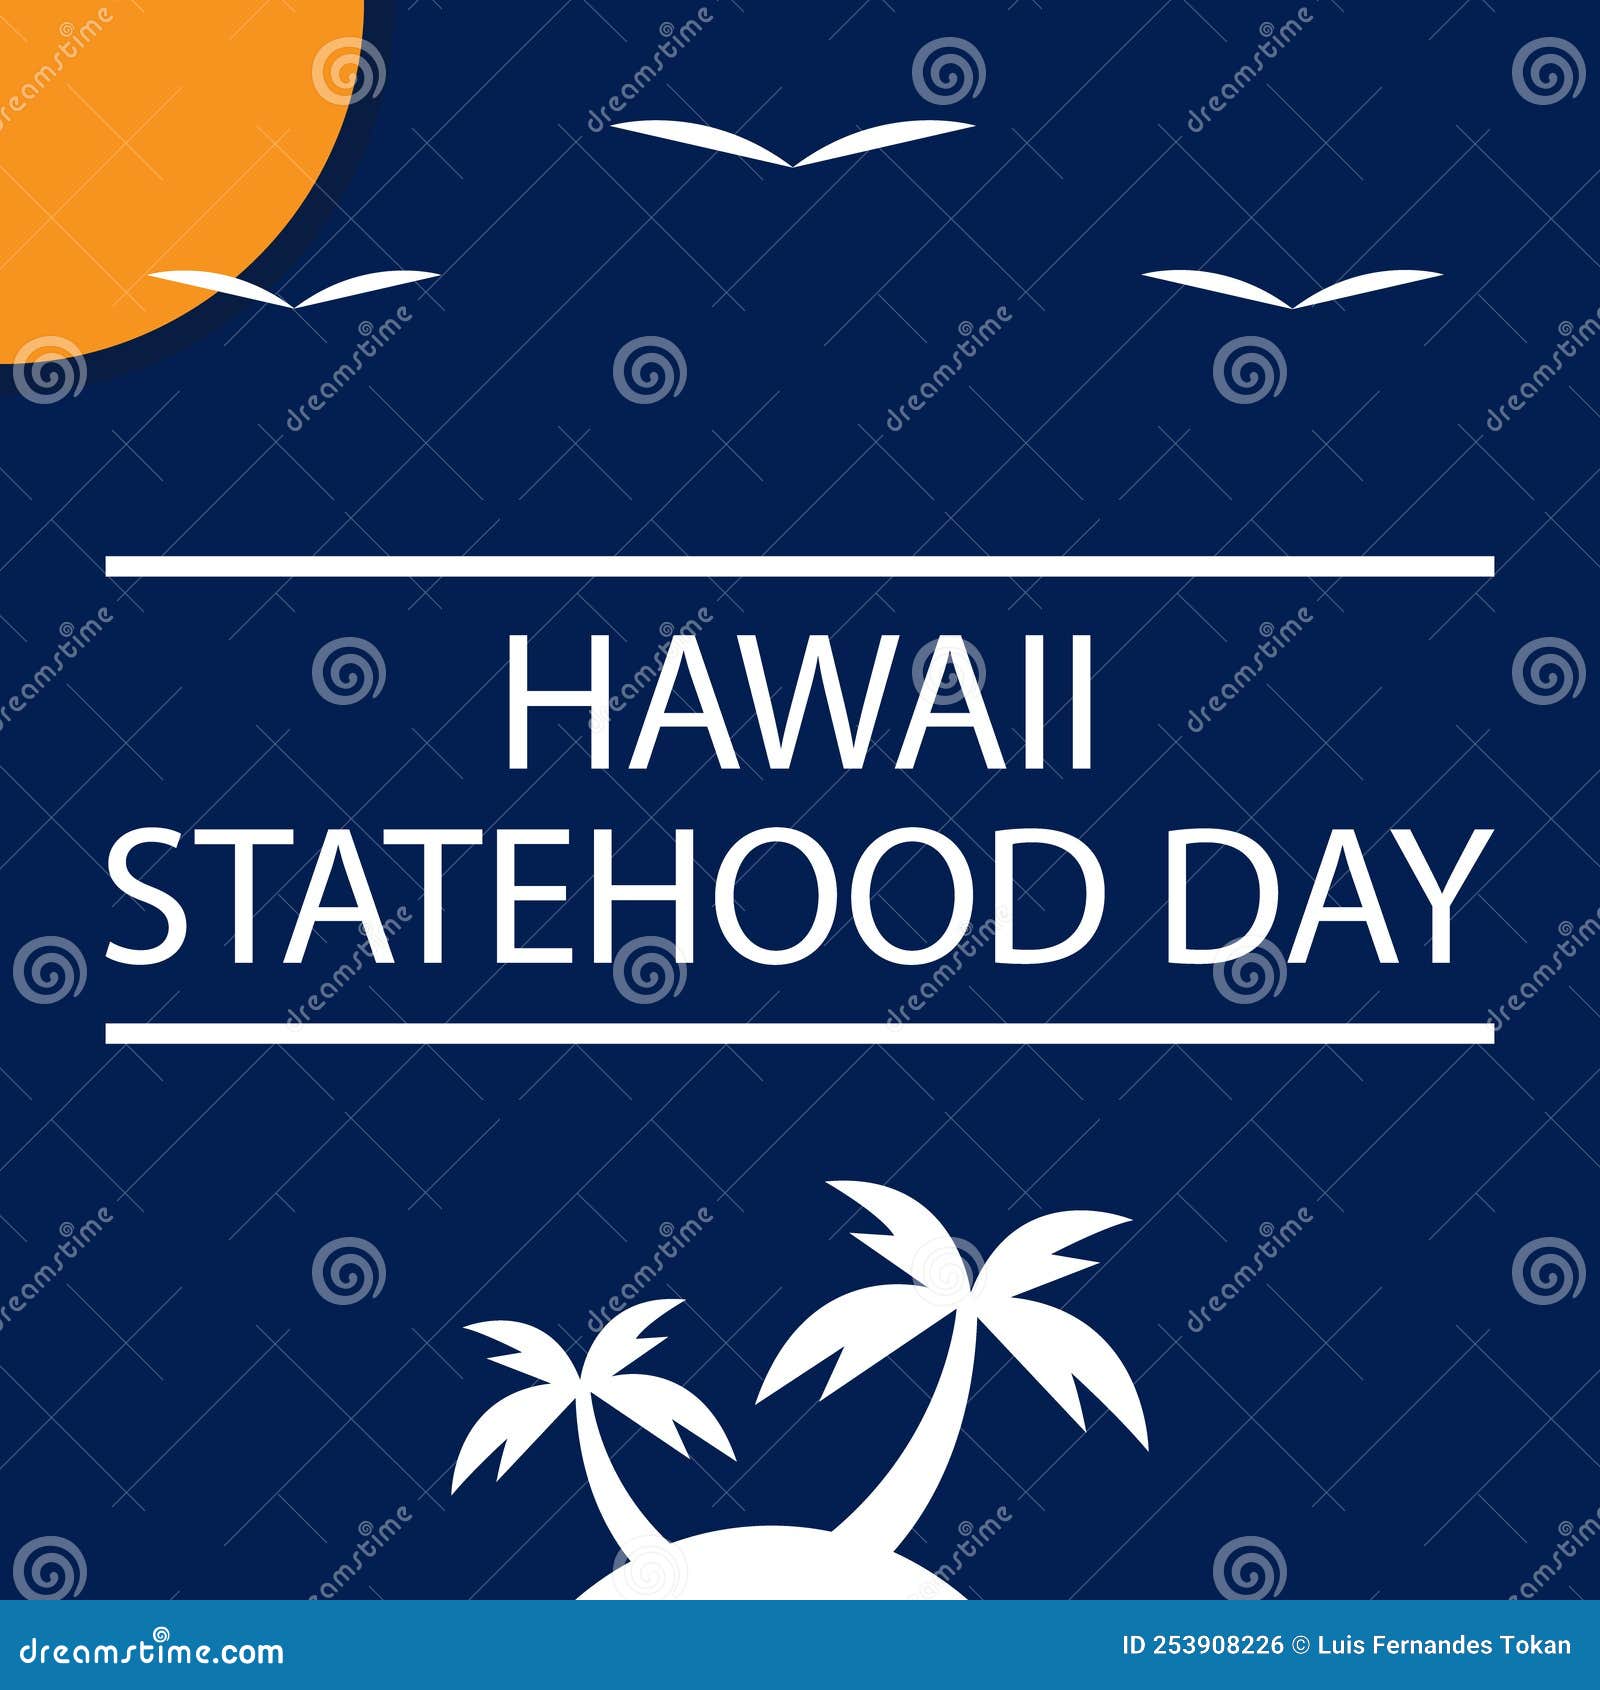 Hawaii Statehood Day, August 19th, Social Media Post, Vector